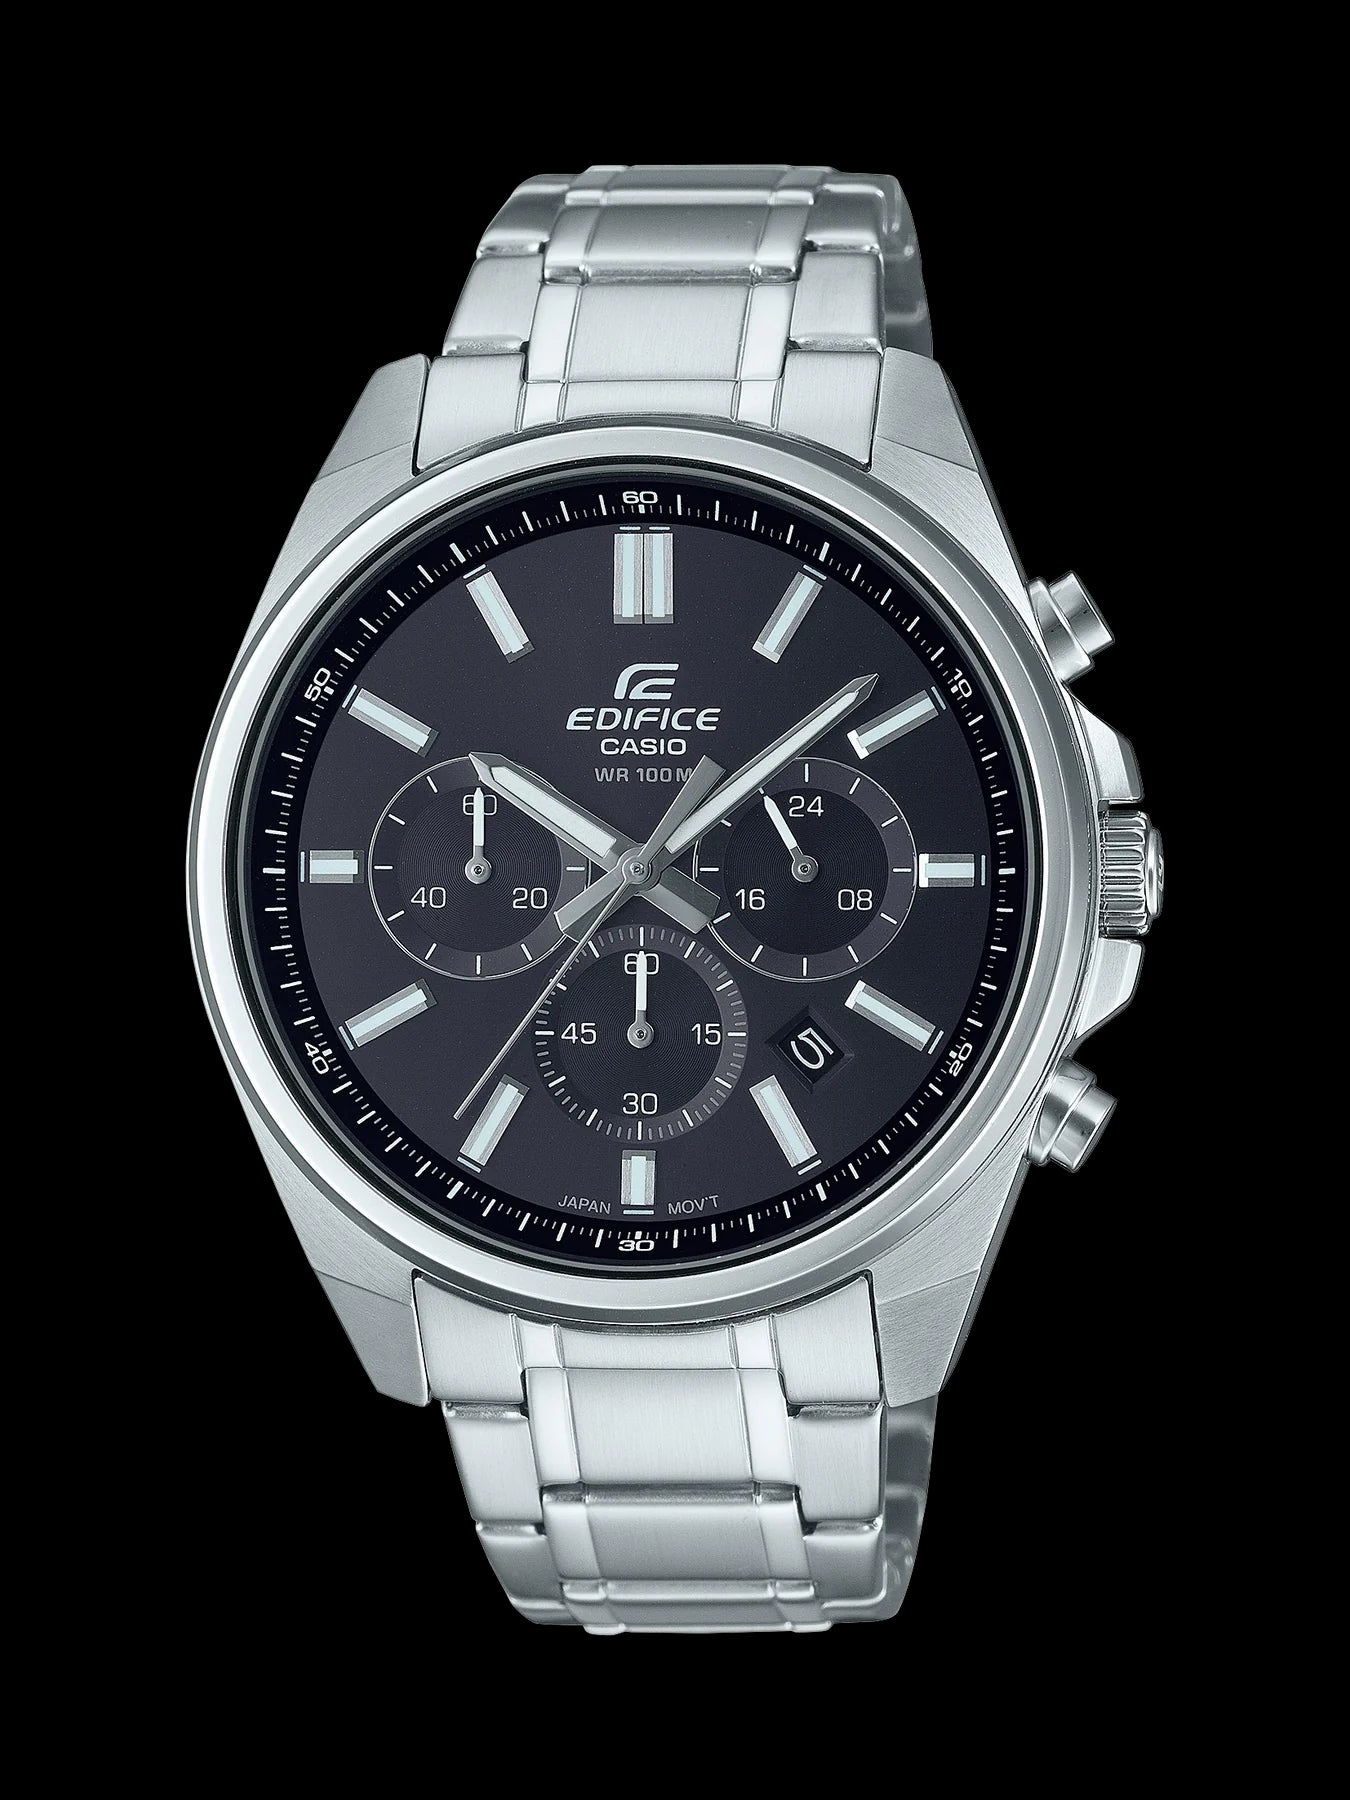 Casio Ediface Analogue Chronograph Watch